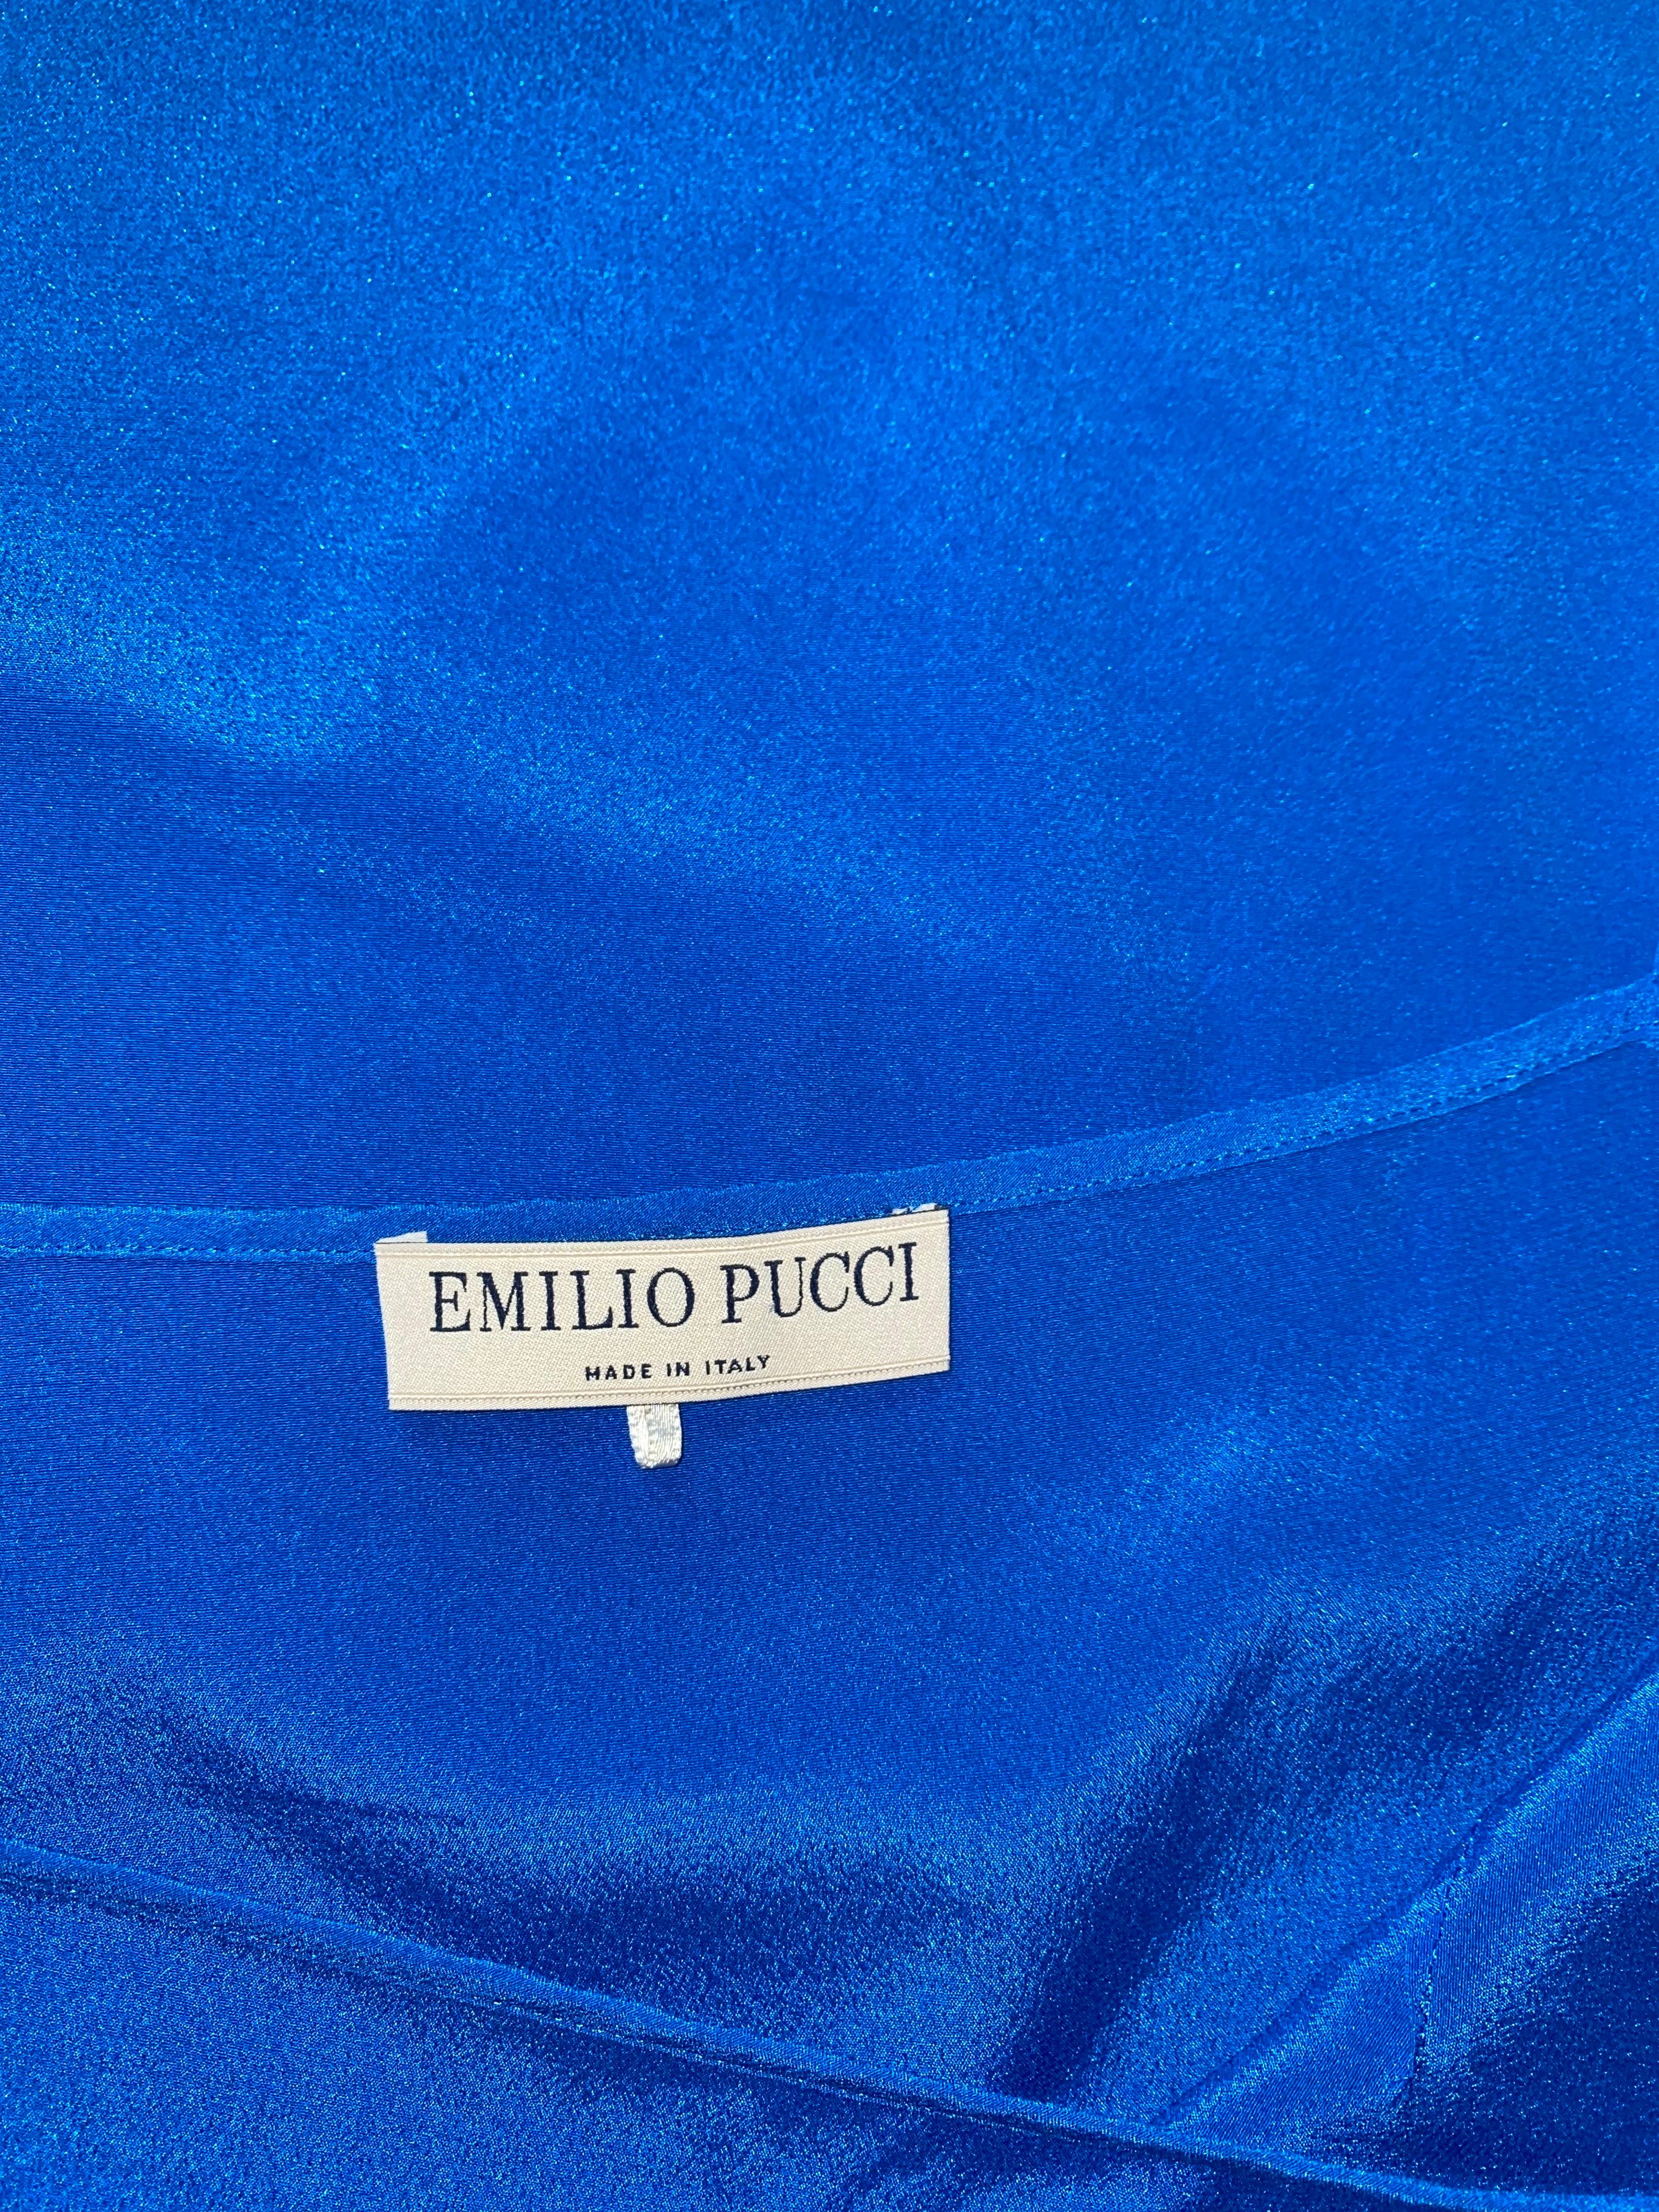 Emilio Pucci Tropical Bamboo Signature Print Silk Top Shorts Suit Ensemble Set S For Sale 4